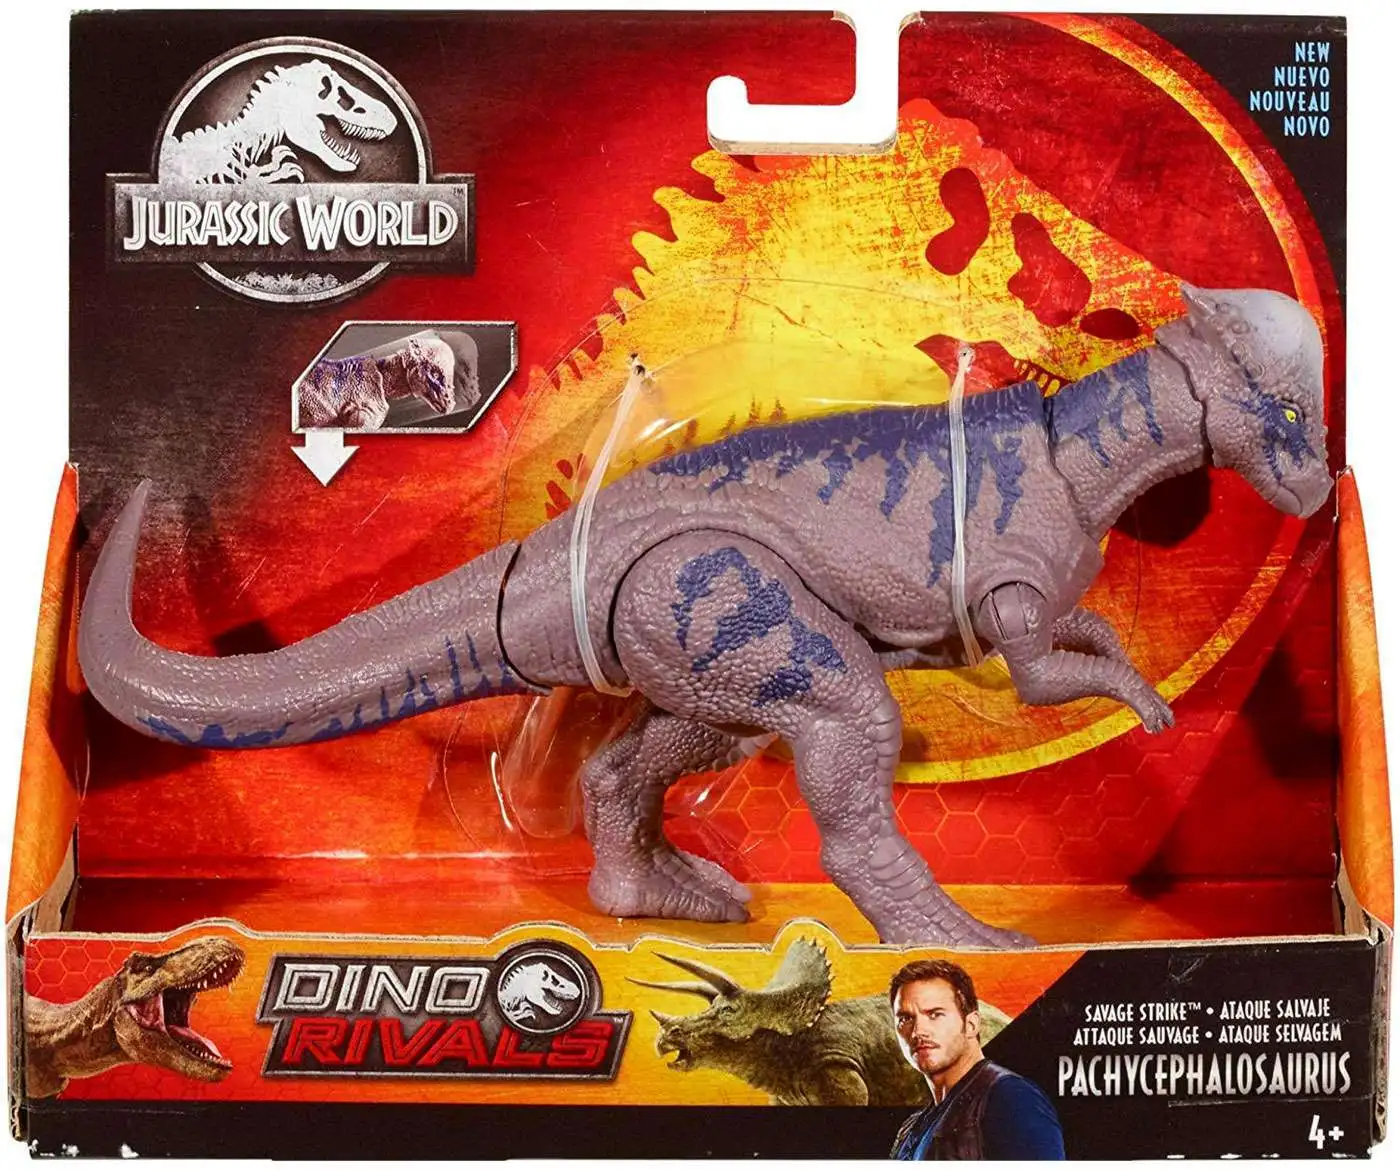 Jurassic World PACHYCEPHALOSAURUS Savage Strike Action Figure PlaySet Mattel 